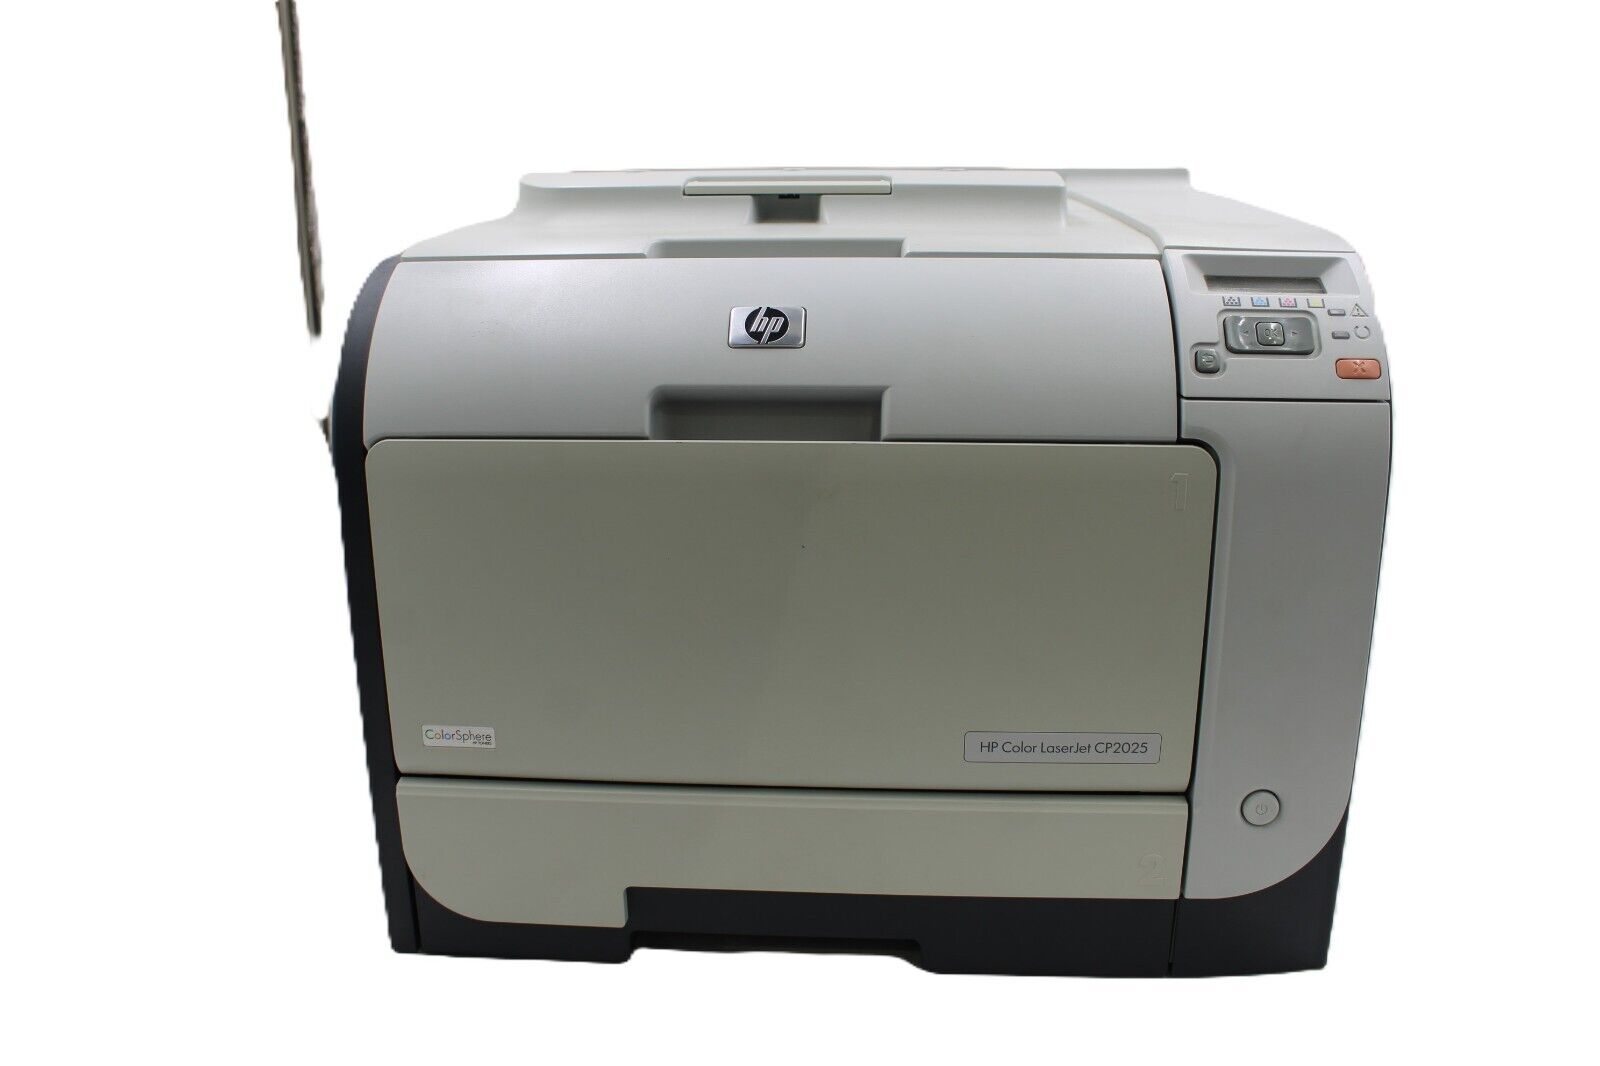 HP Color LaserJet CP2025 Workgroup Laser Printer With Toner TESTED